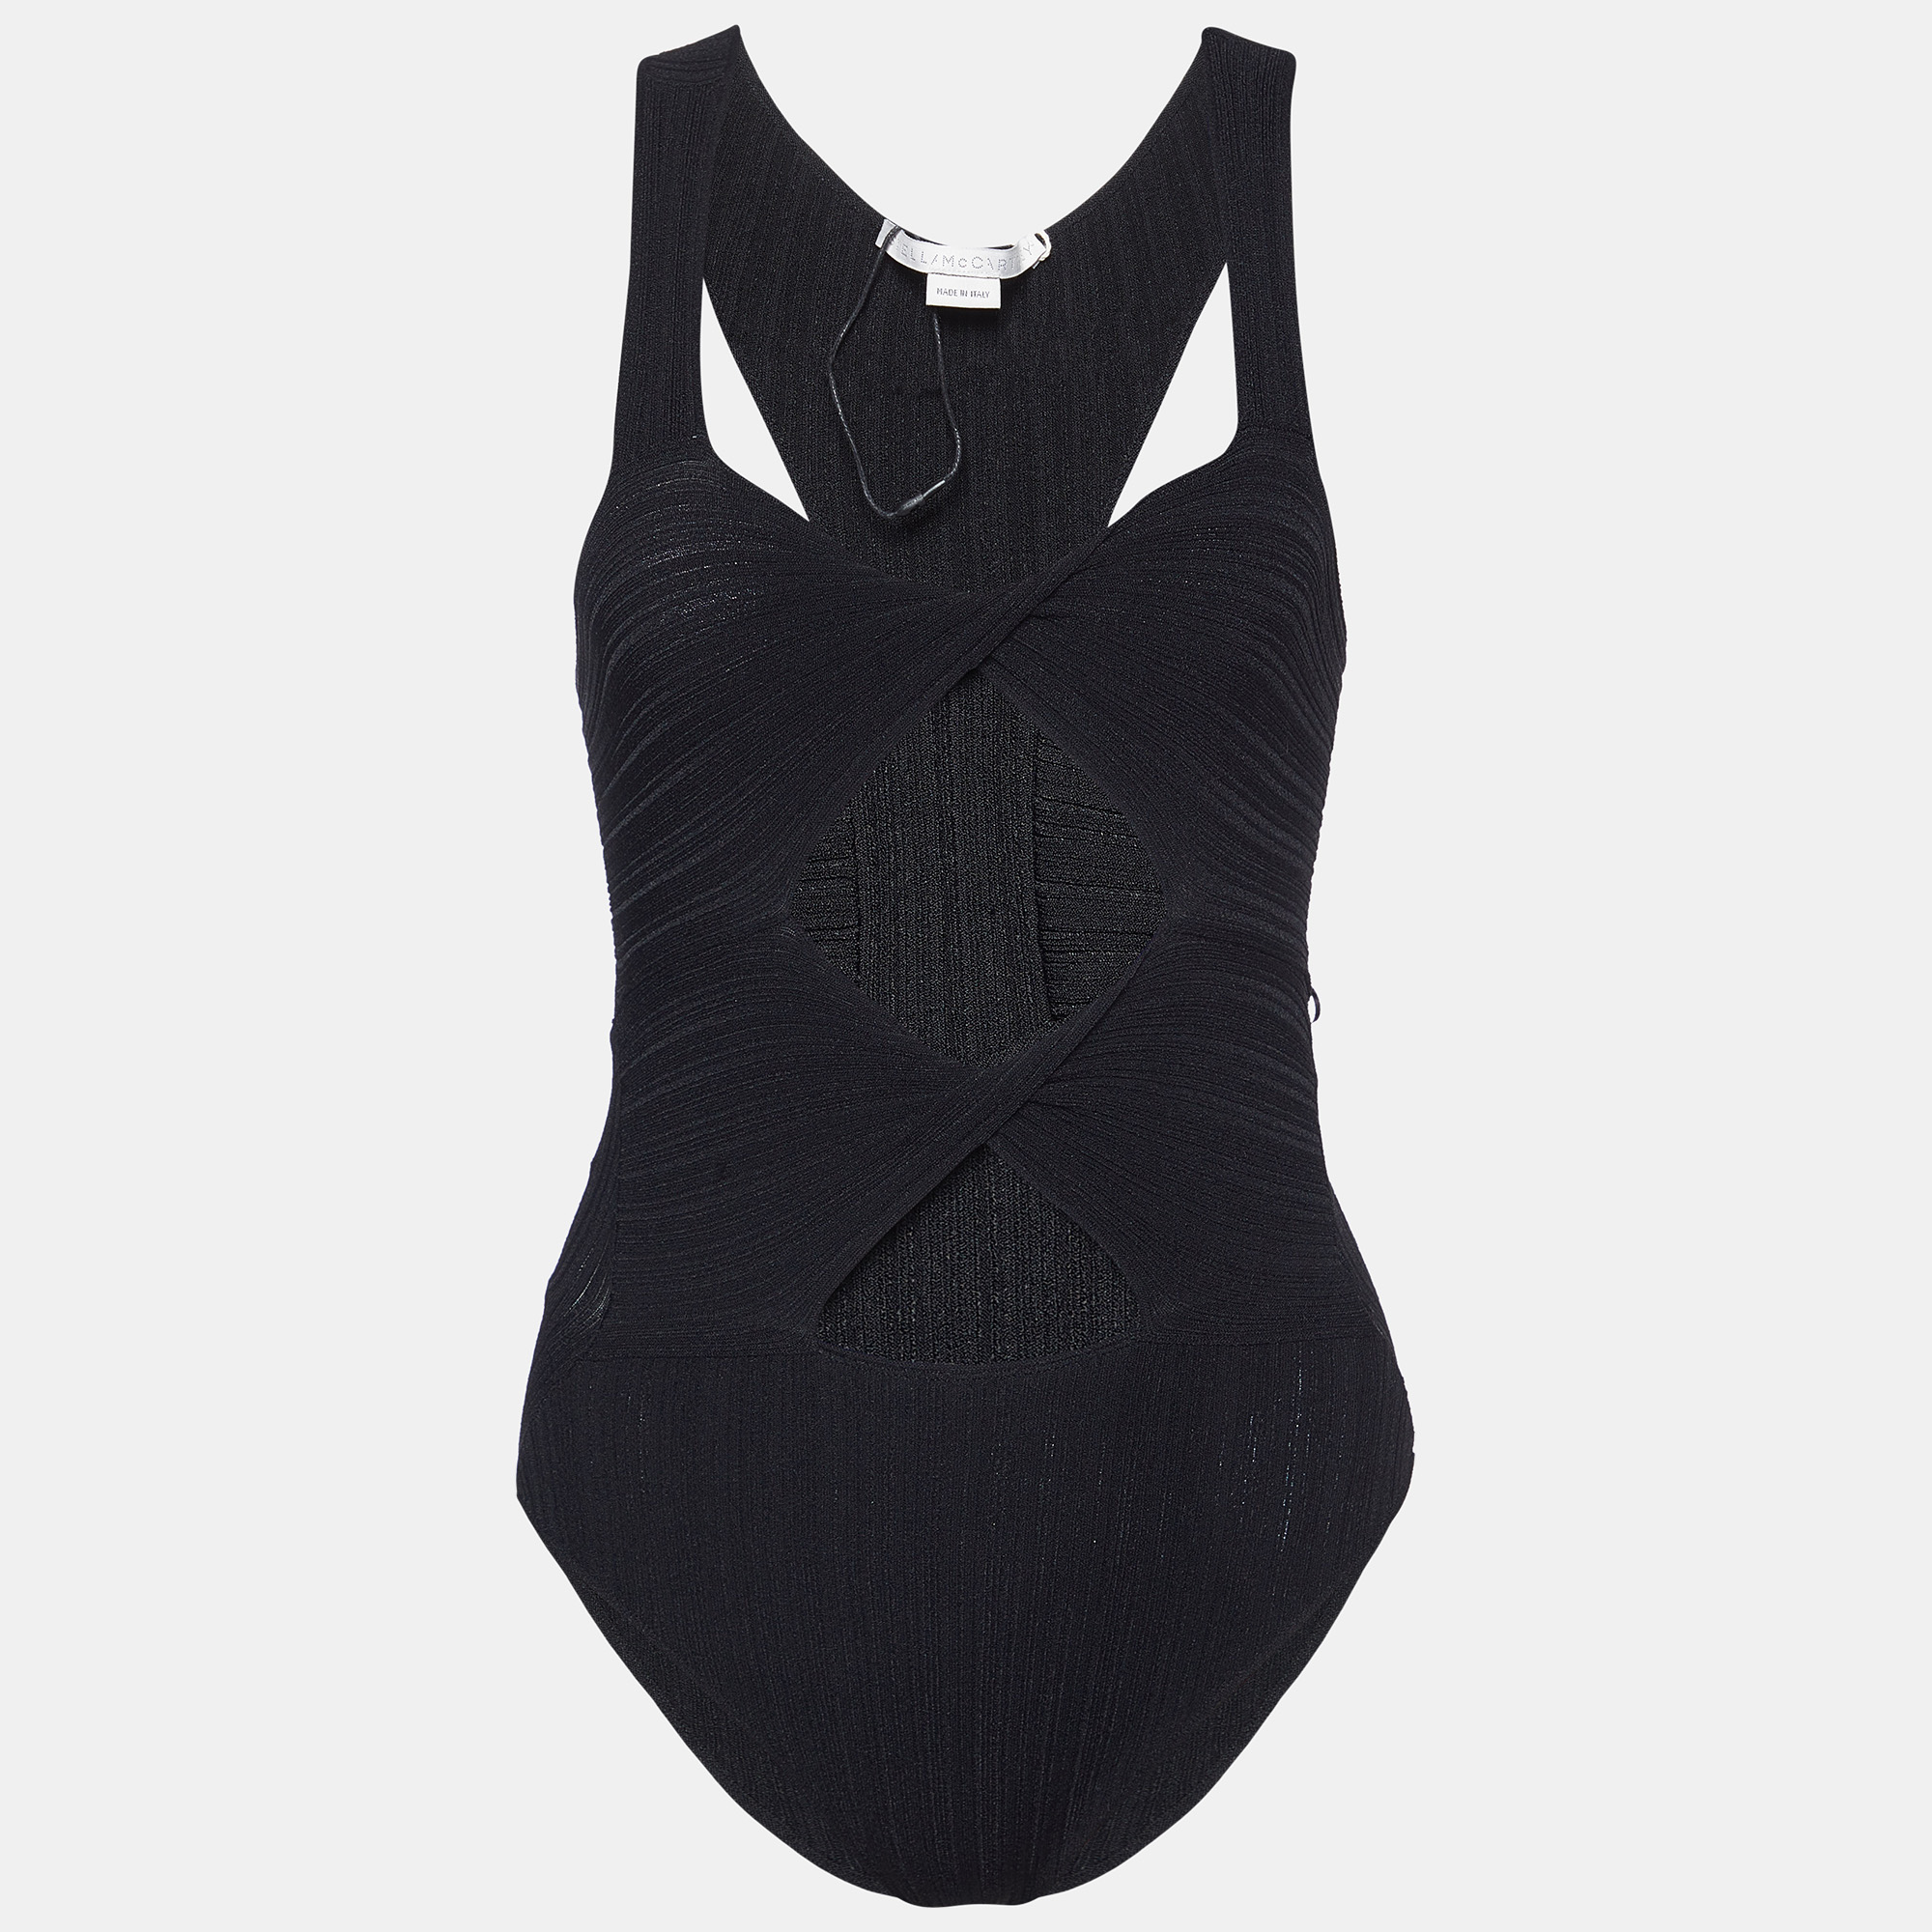 

Stella McCartney Black Patterned Knit Cut-Out Bodysuit Top S